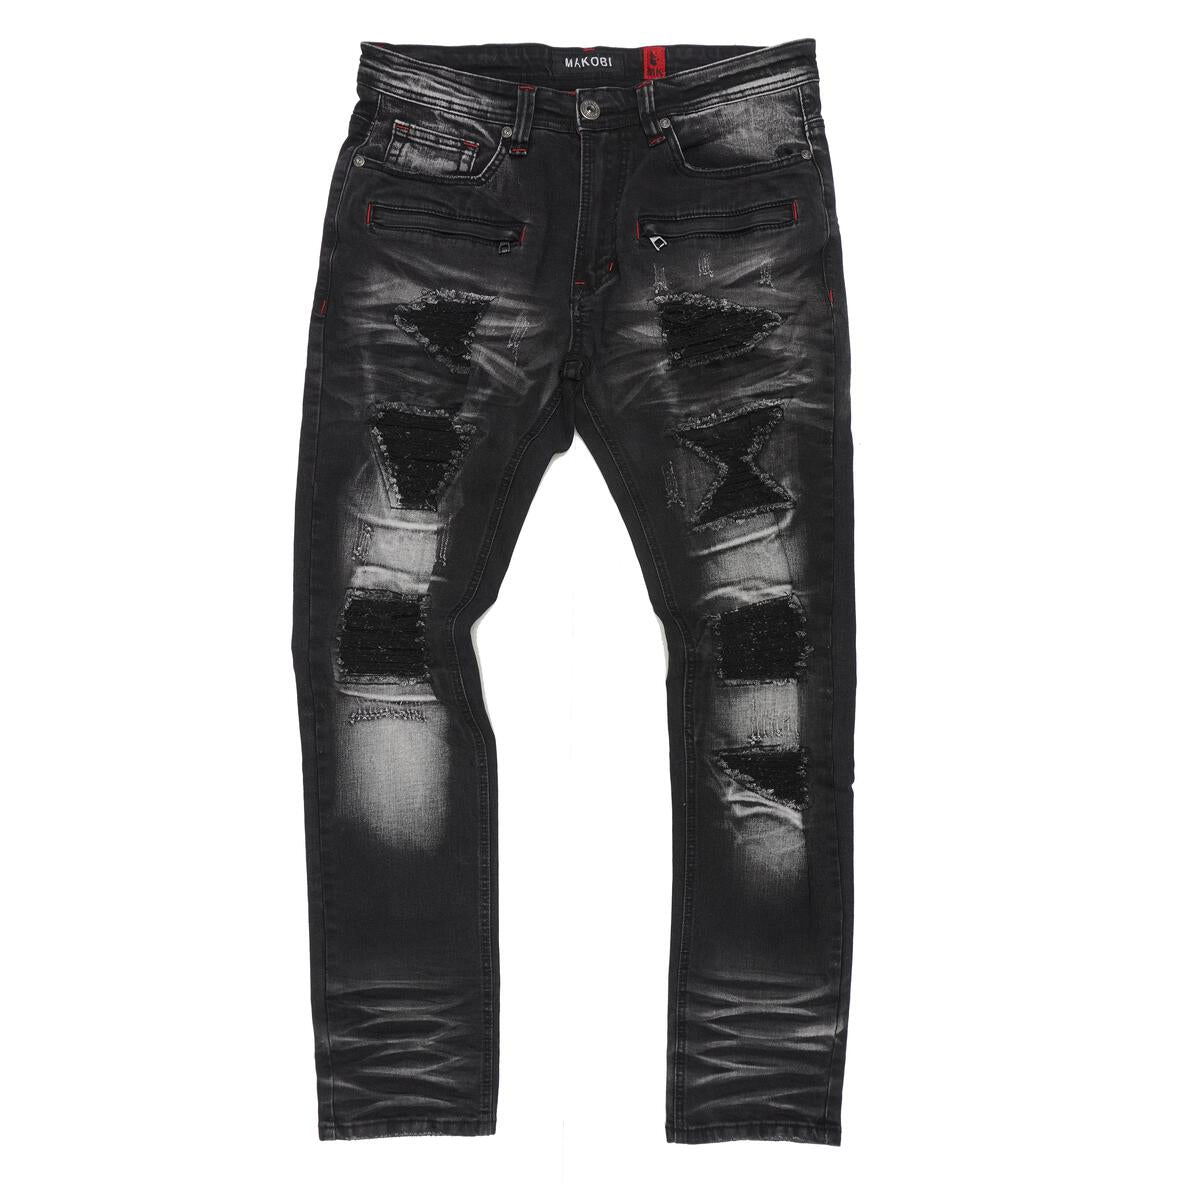 M1944 Pipa Shredded Jeans - Black Wash